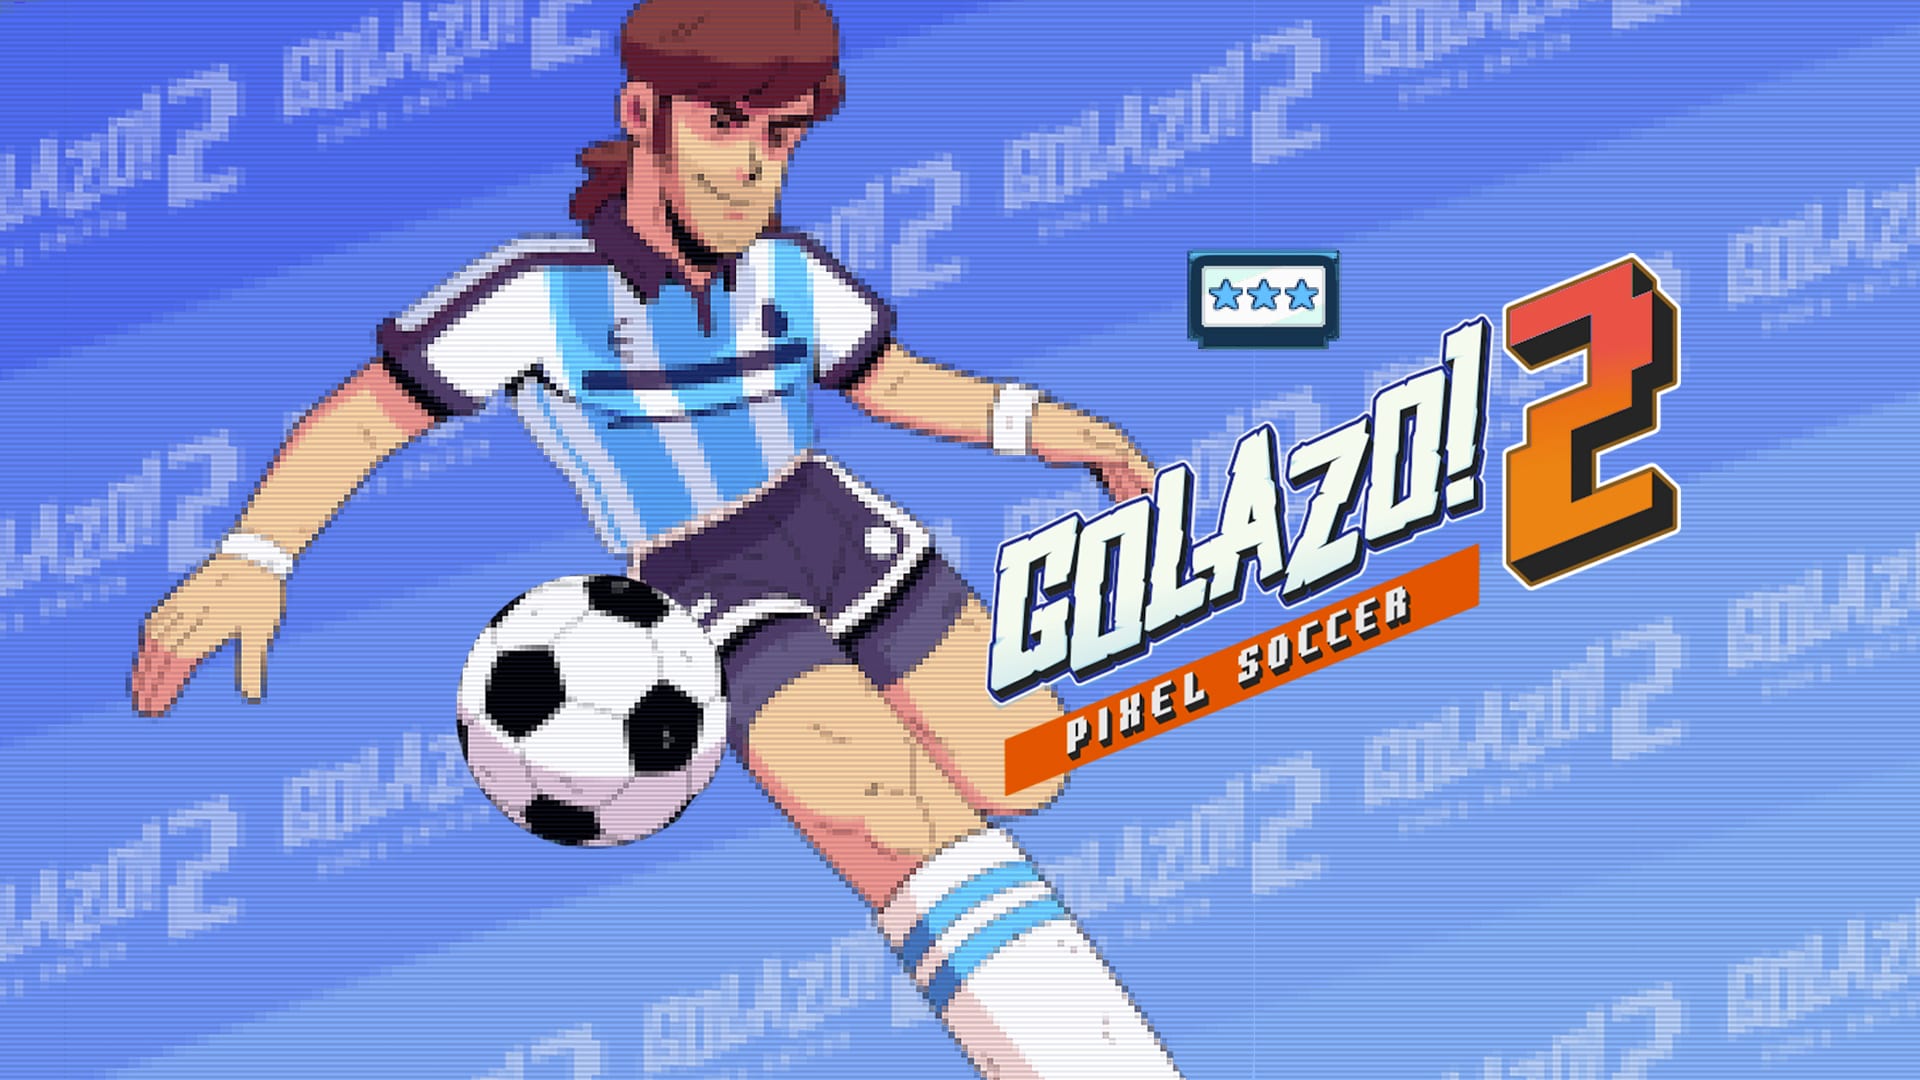 Golazo! 2: Pixel Soccer 1